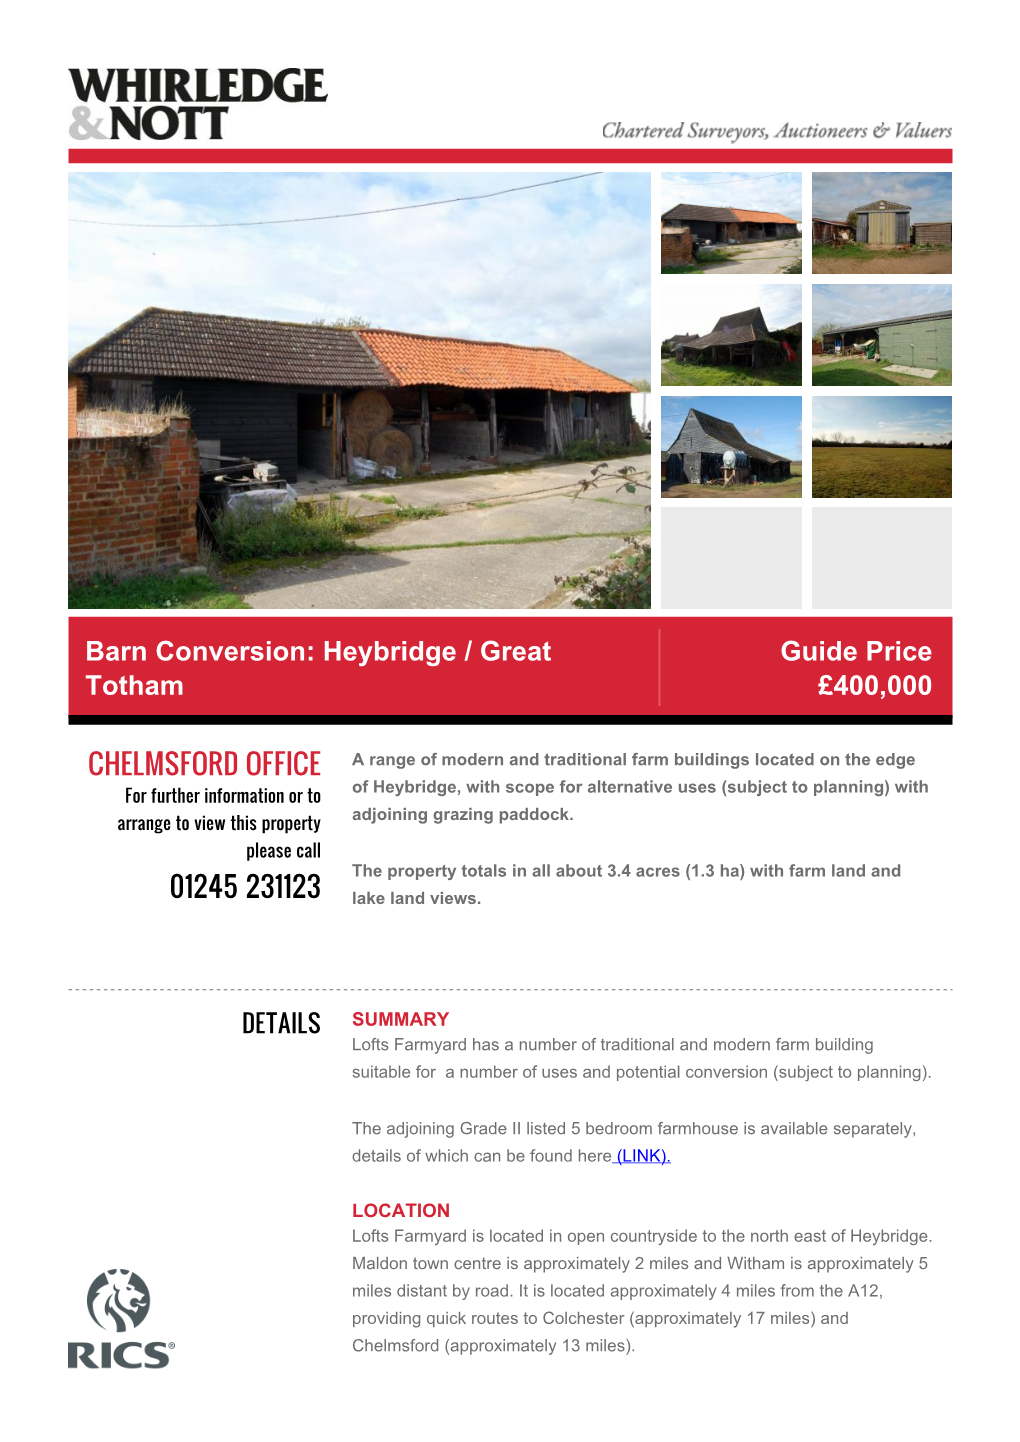 Barn Conversion: Heybridge / Great Totham Guide Price £400,000